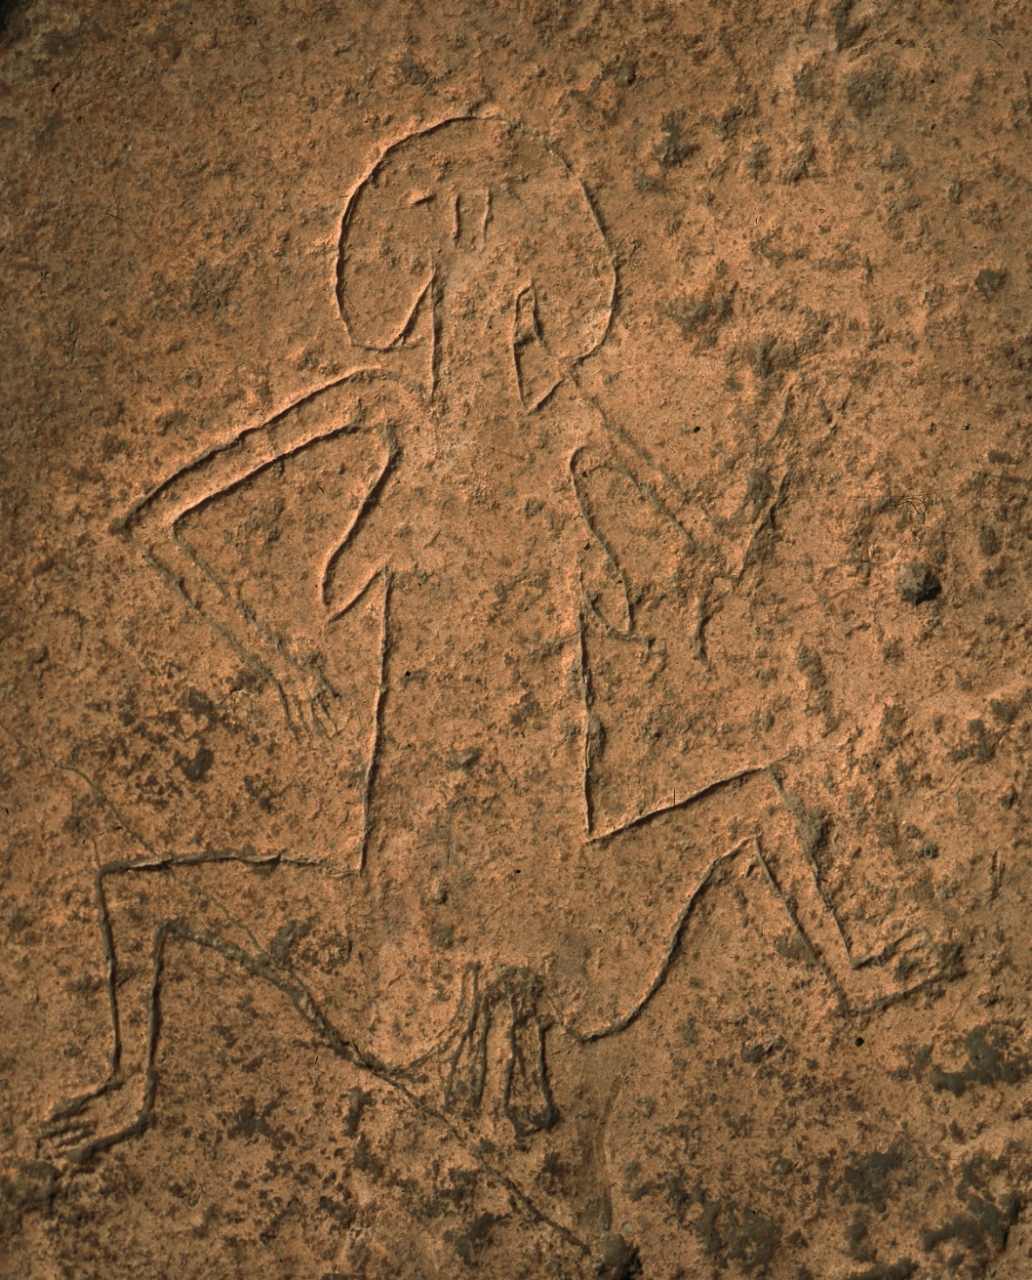 Was Göbekli Tepe built by Aboriginal Australians? 3